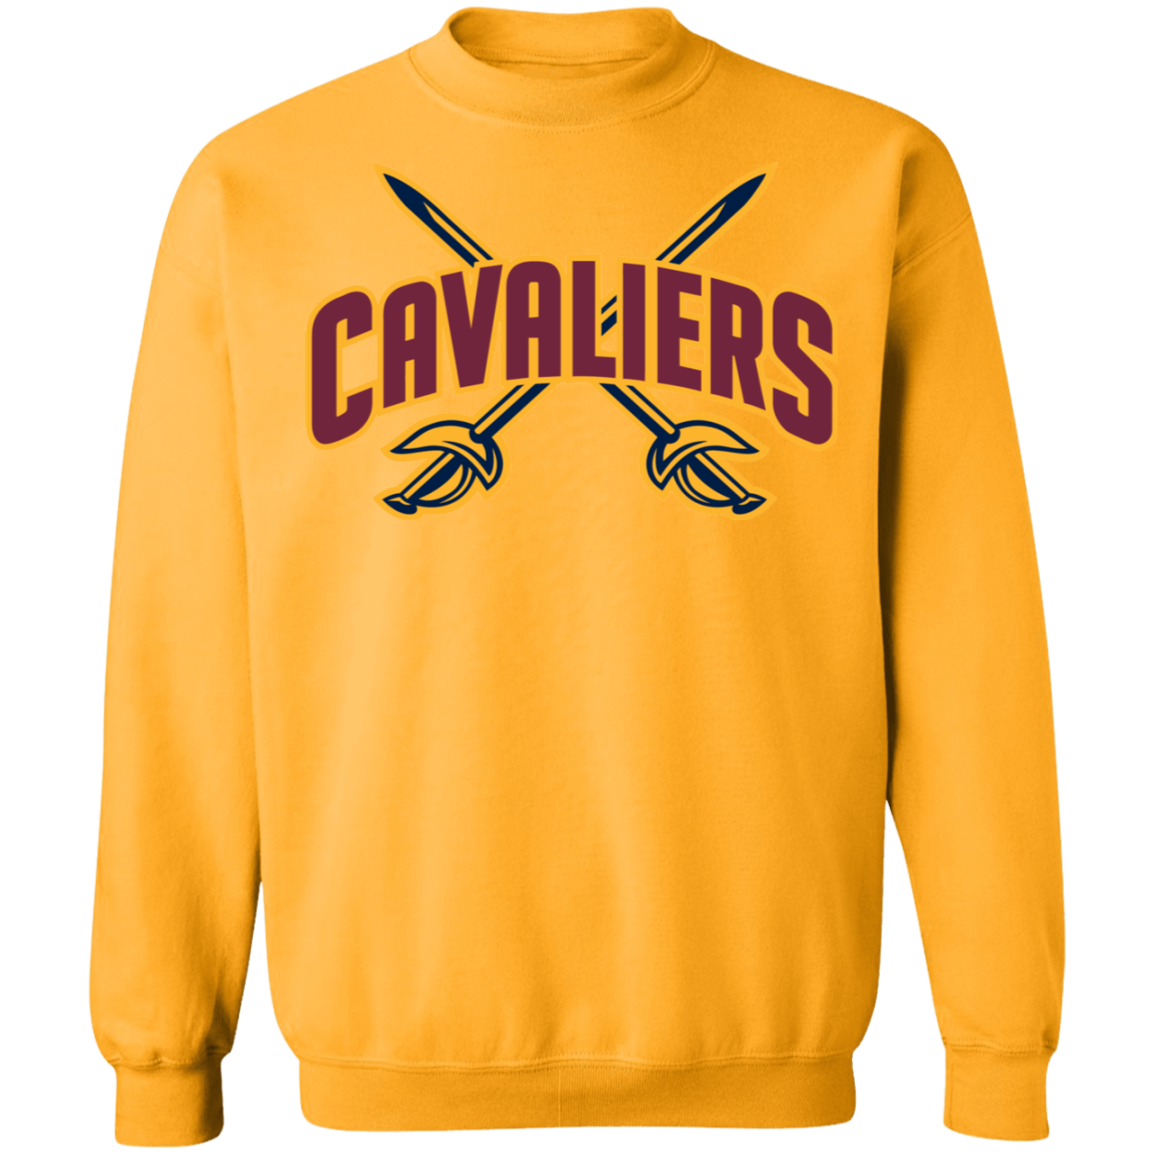 Cleveland Cavaliers Crewneck Sweatshirt - Happy Spring Tee